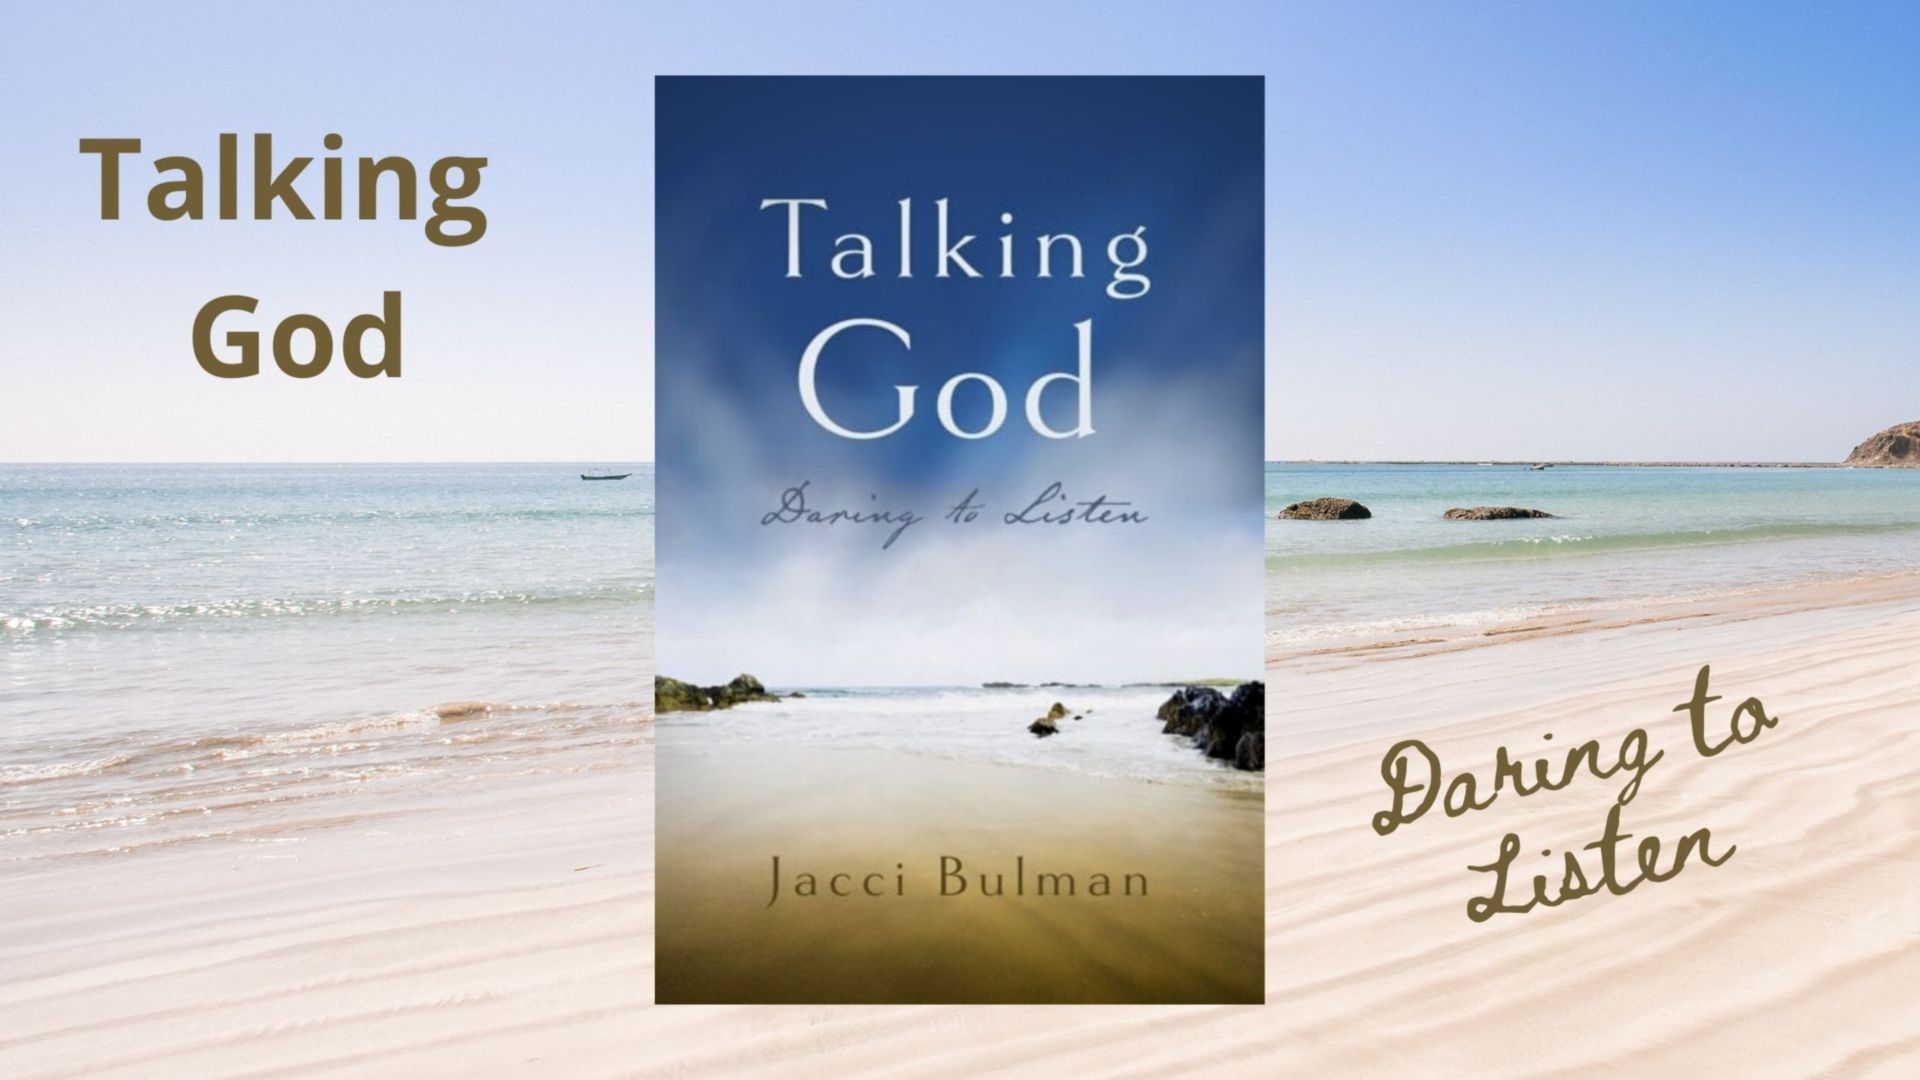 Book review on 'Talking God' by Jacci Bulman